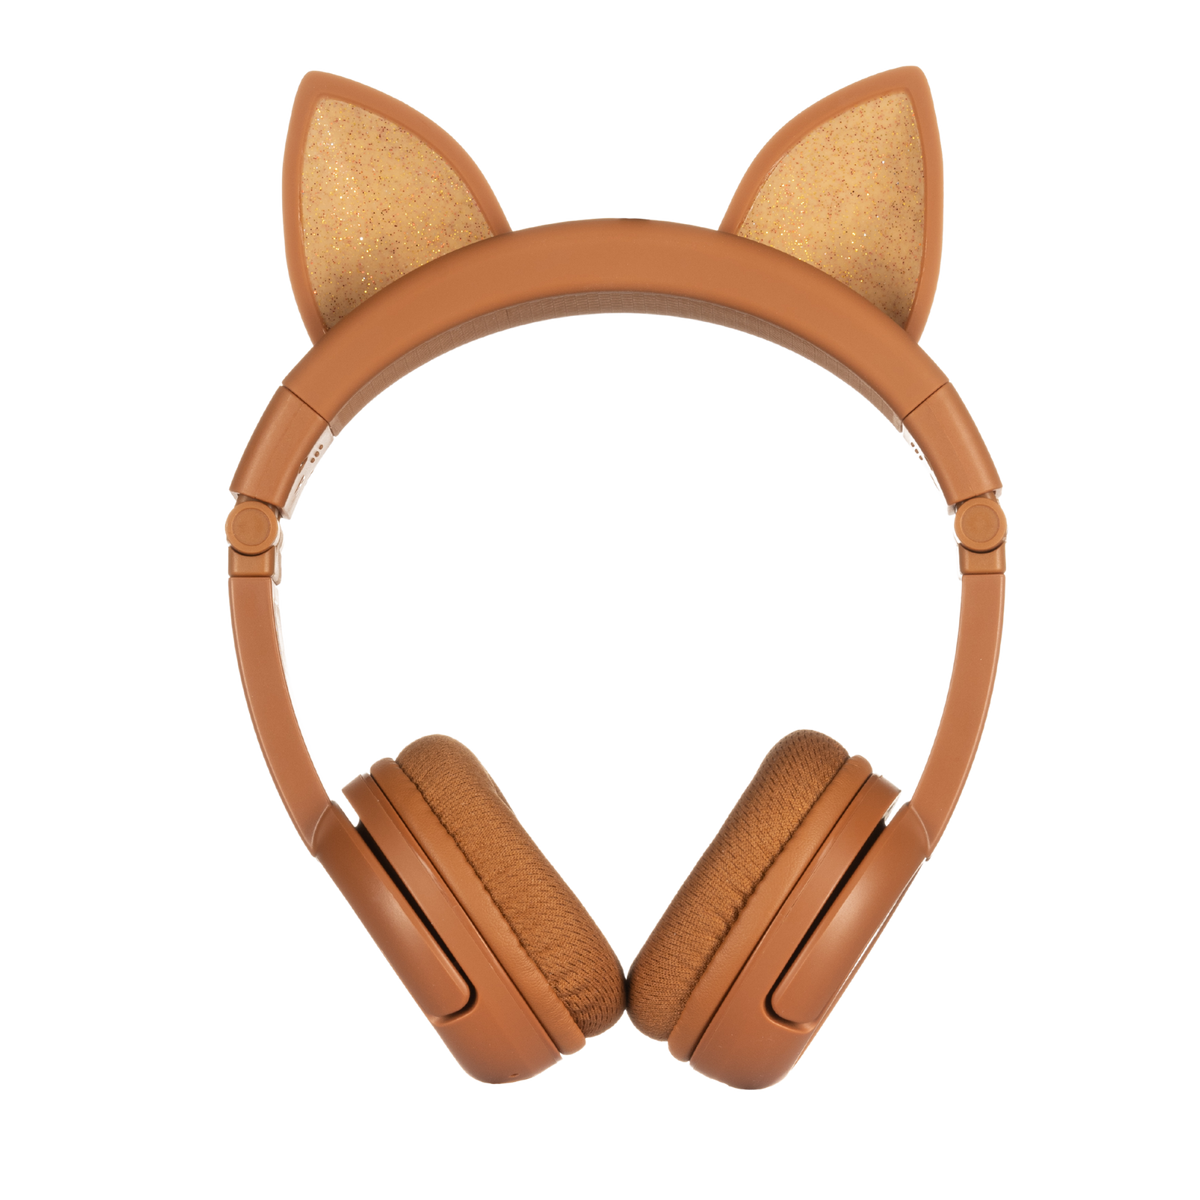 BUDDYPHONES PlayEars+ Bluetooth Wireless Headset - Superb Sound &amp; Playful Animal Ears Design - Fox - Orange